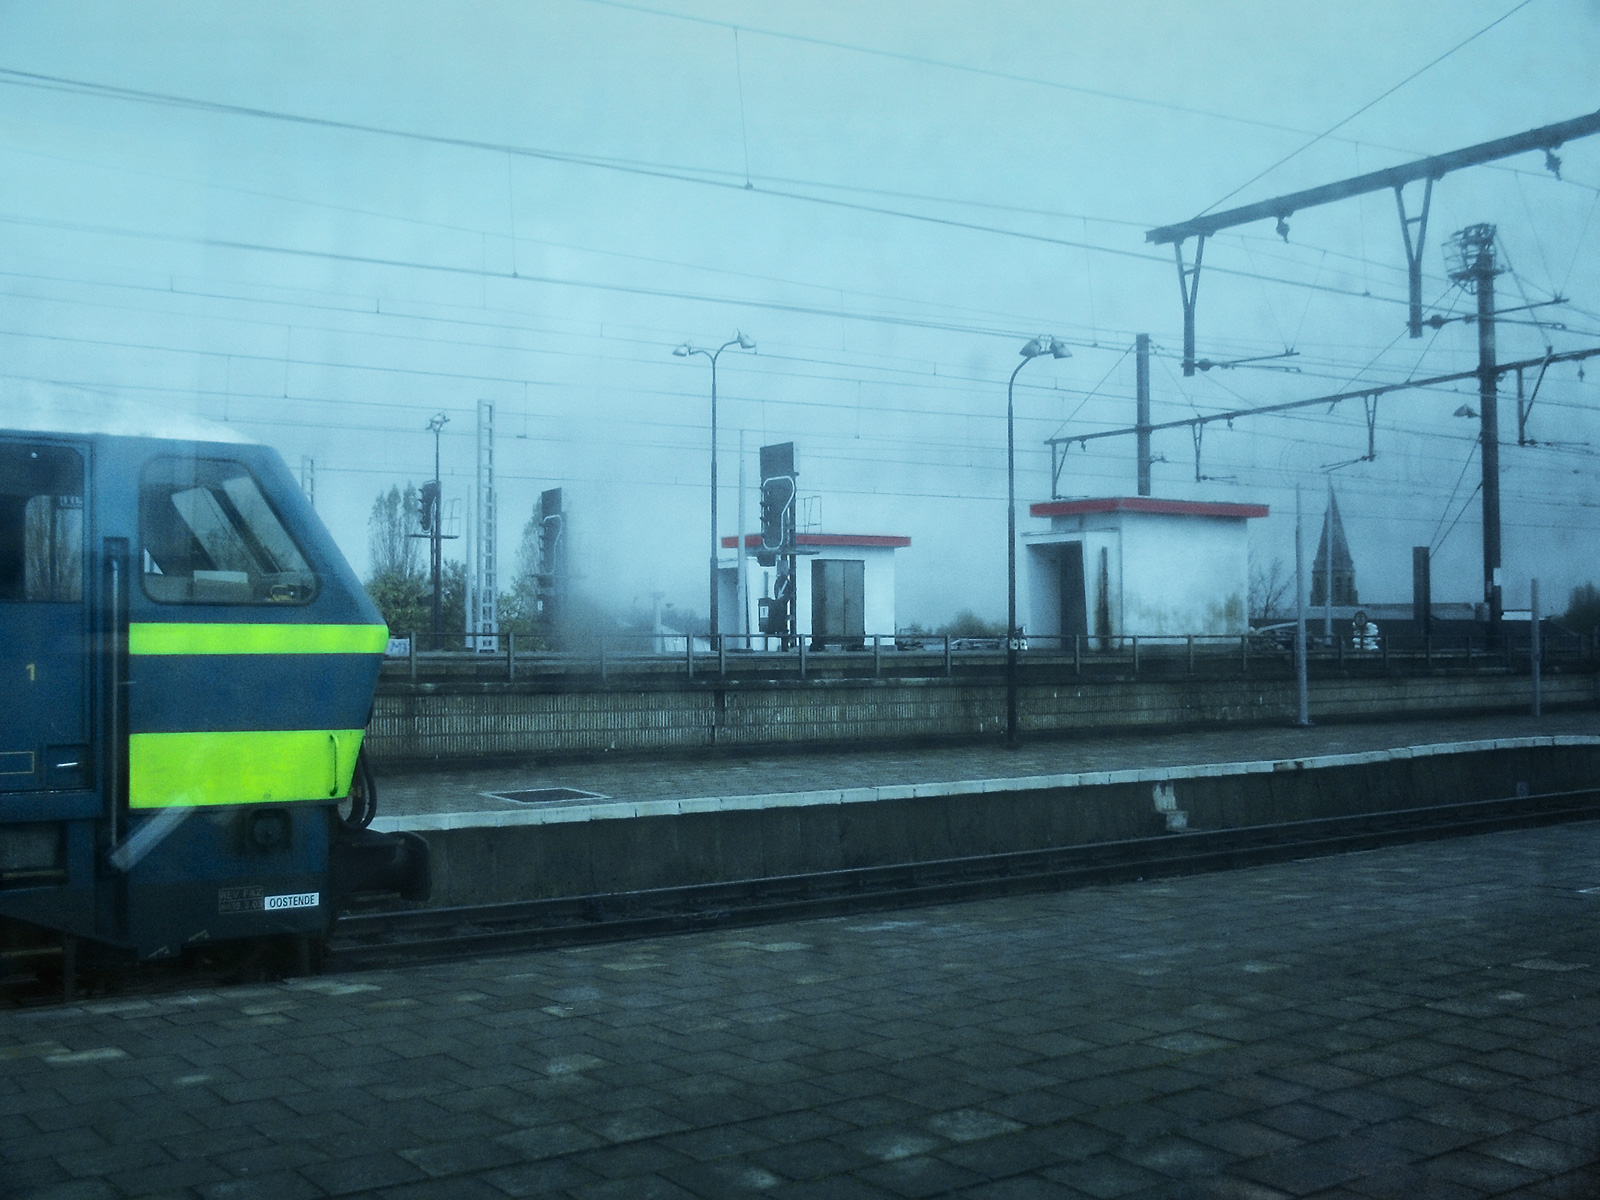 train_leaving_station-stephen-austin-welch-director-photographer